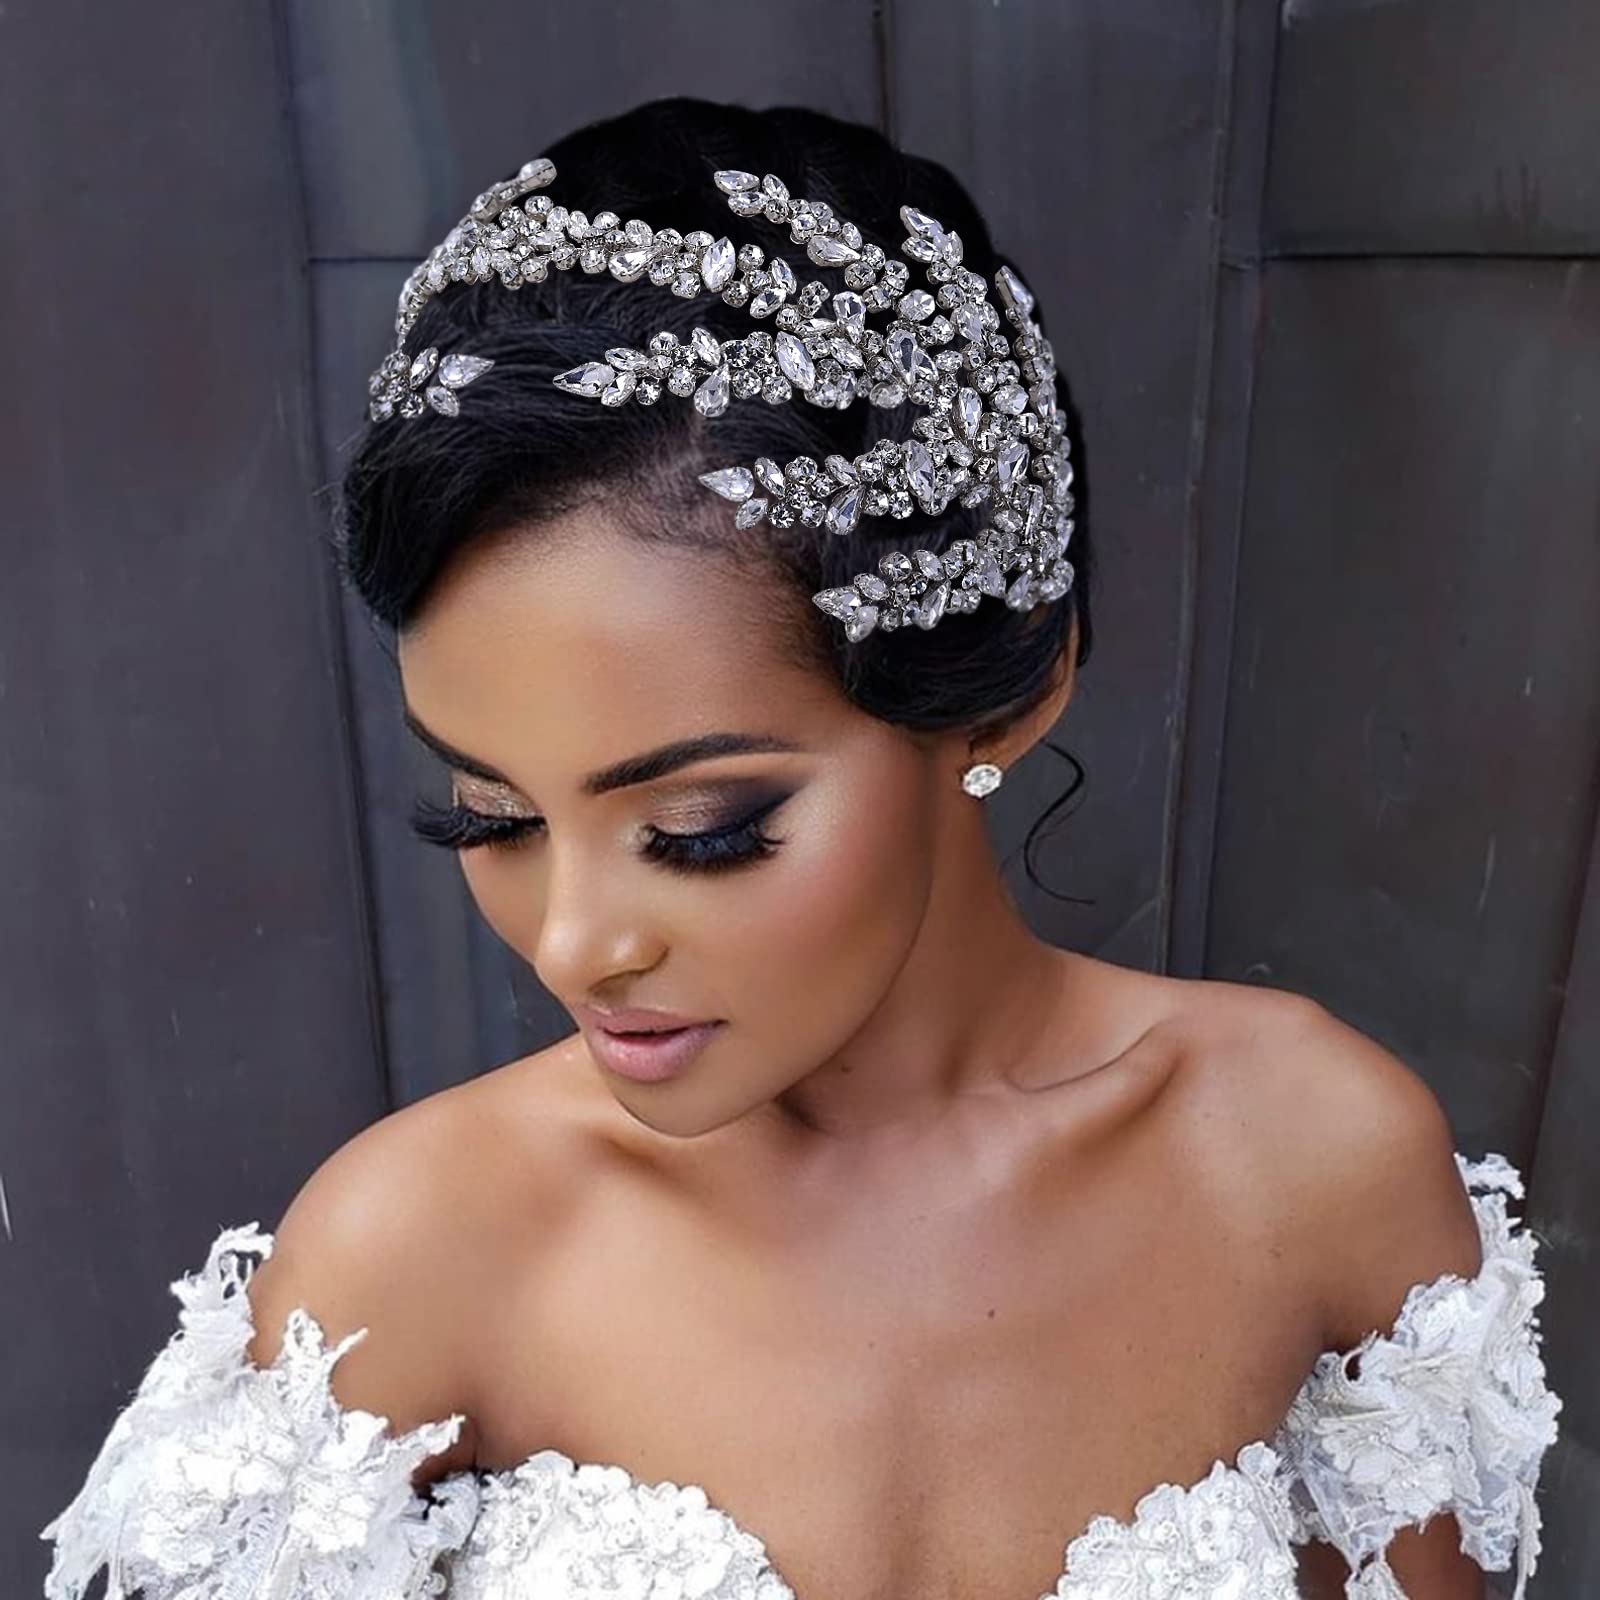 Lace Headband with Veil, Wedding Hair Accessories, Bridal Veil Headband with Rhinestone, Bridal Headpiece with Veil | TaLanaLita